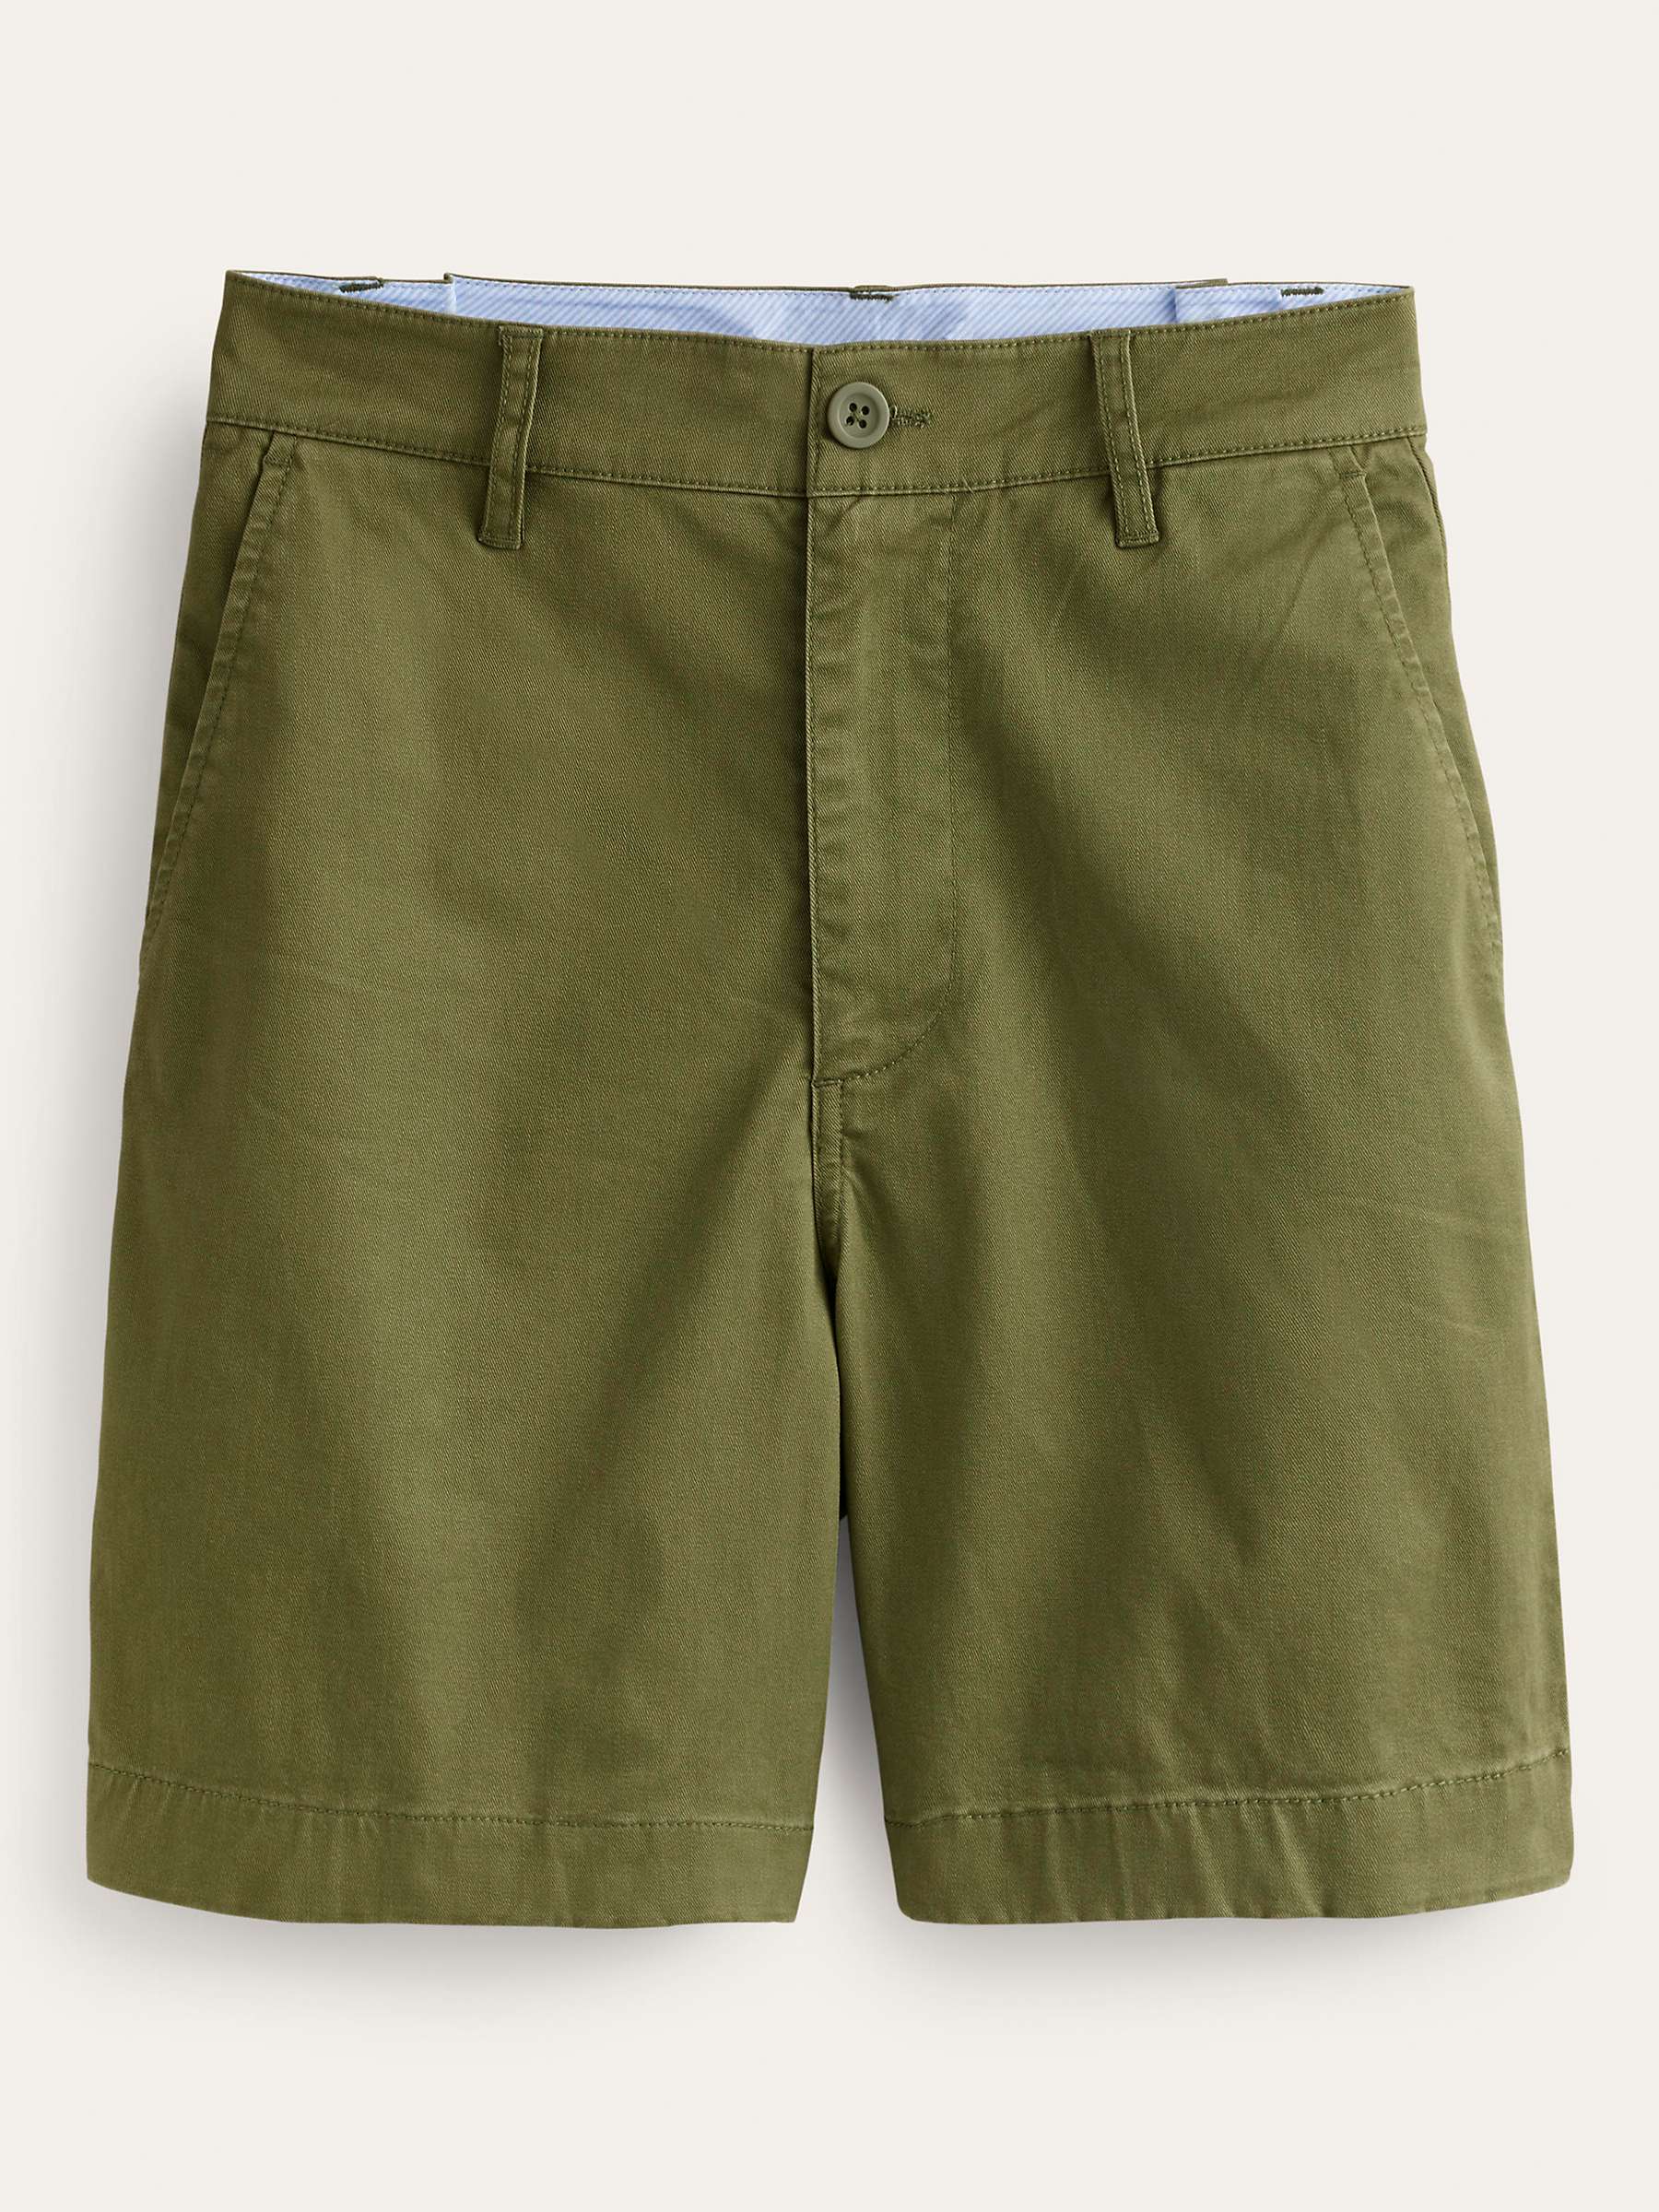 Buy Boden Barnsbury Chino Shorts, Mayfly Online at johnlewis.com